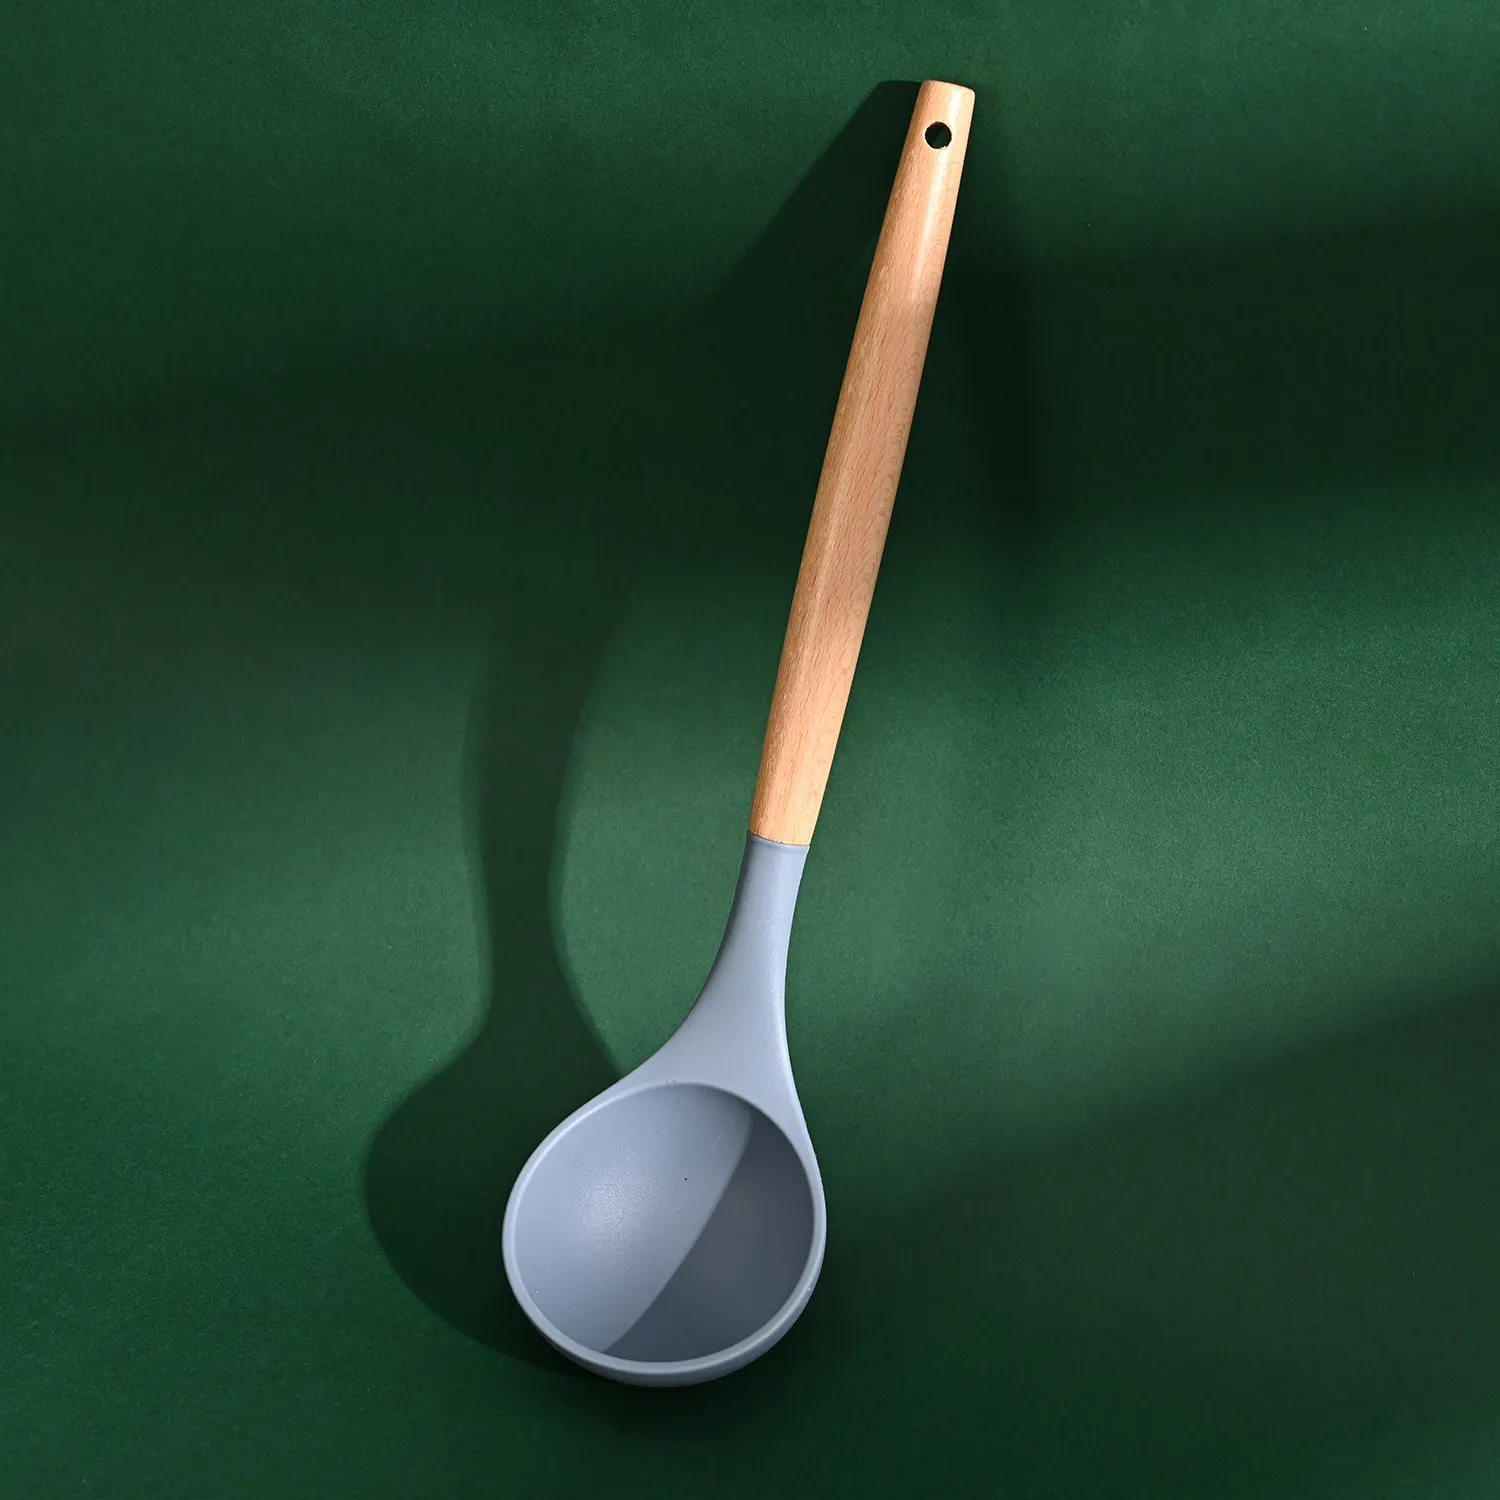 12 Uds. Accesorios de silicona para cocina, utensilios de cocina, juego de utensilios de cocina de silicona con mango de madera